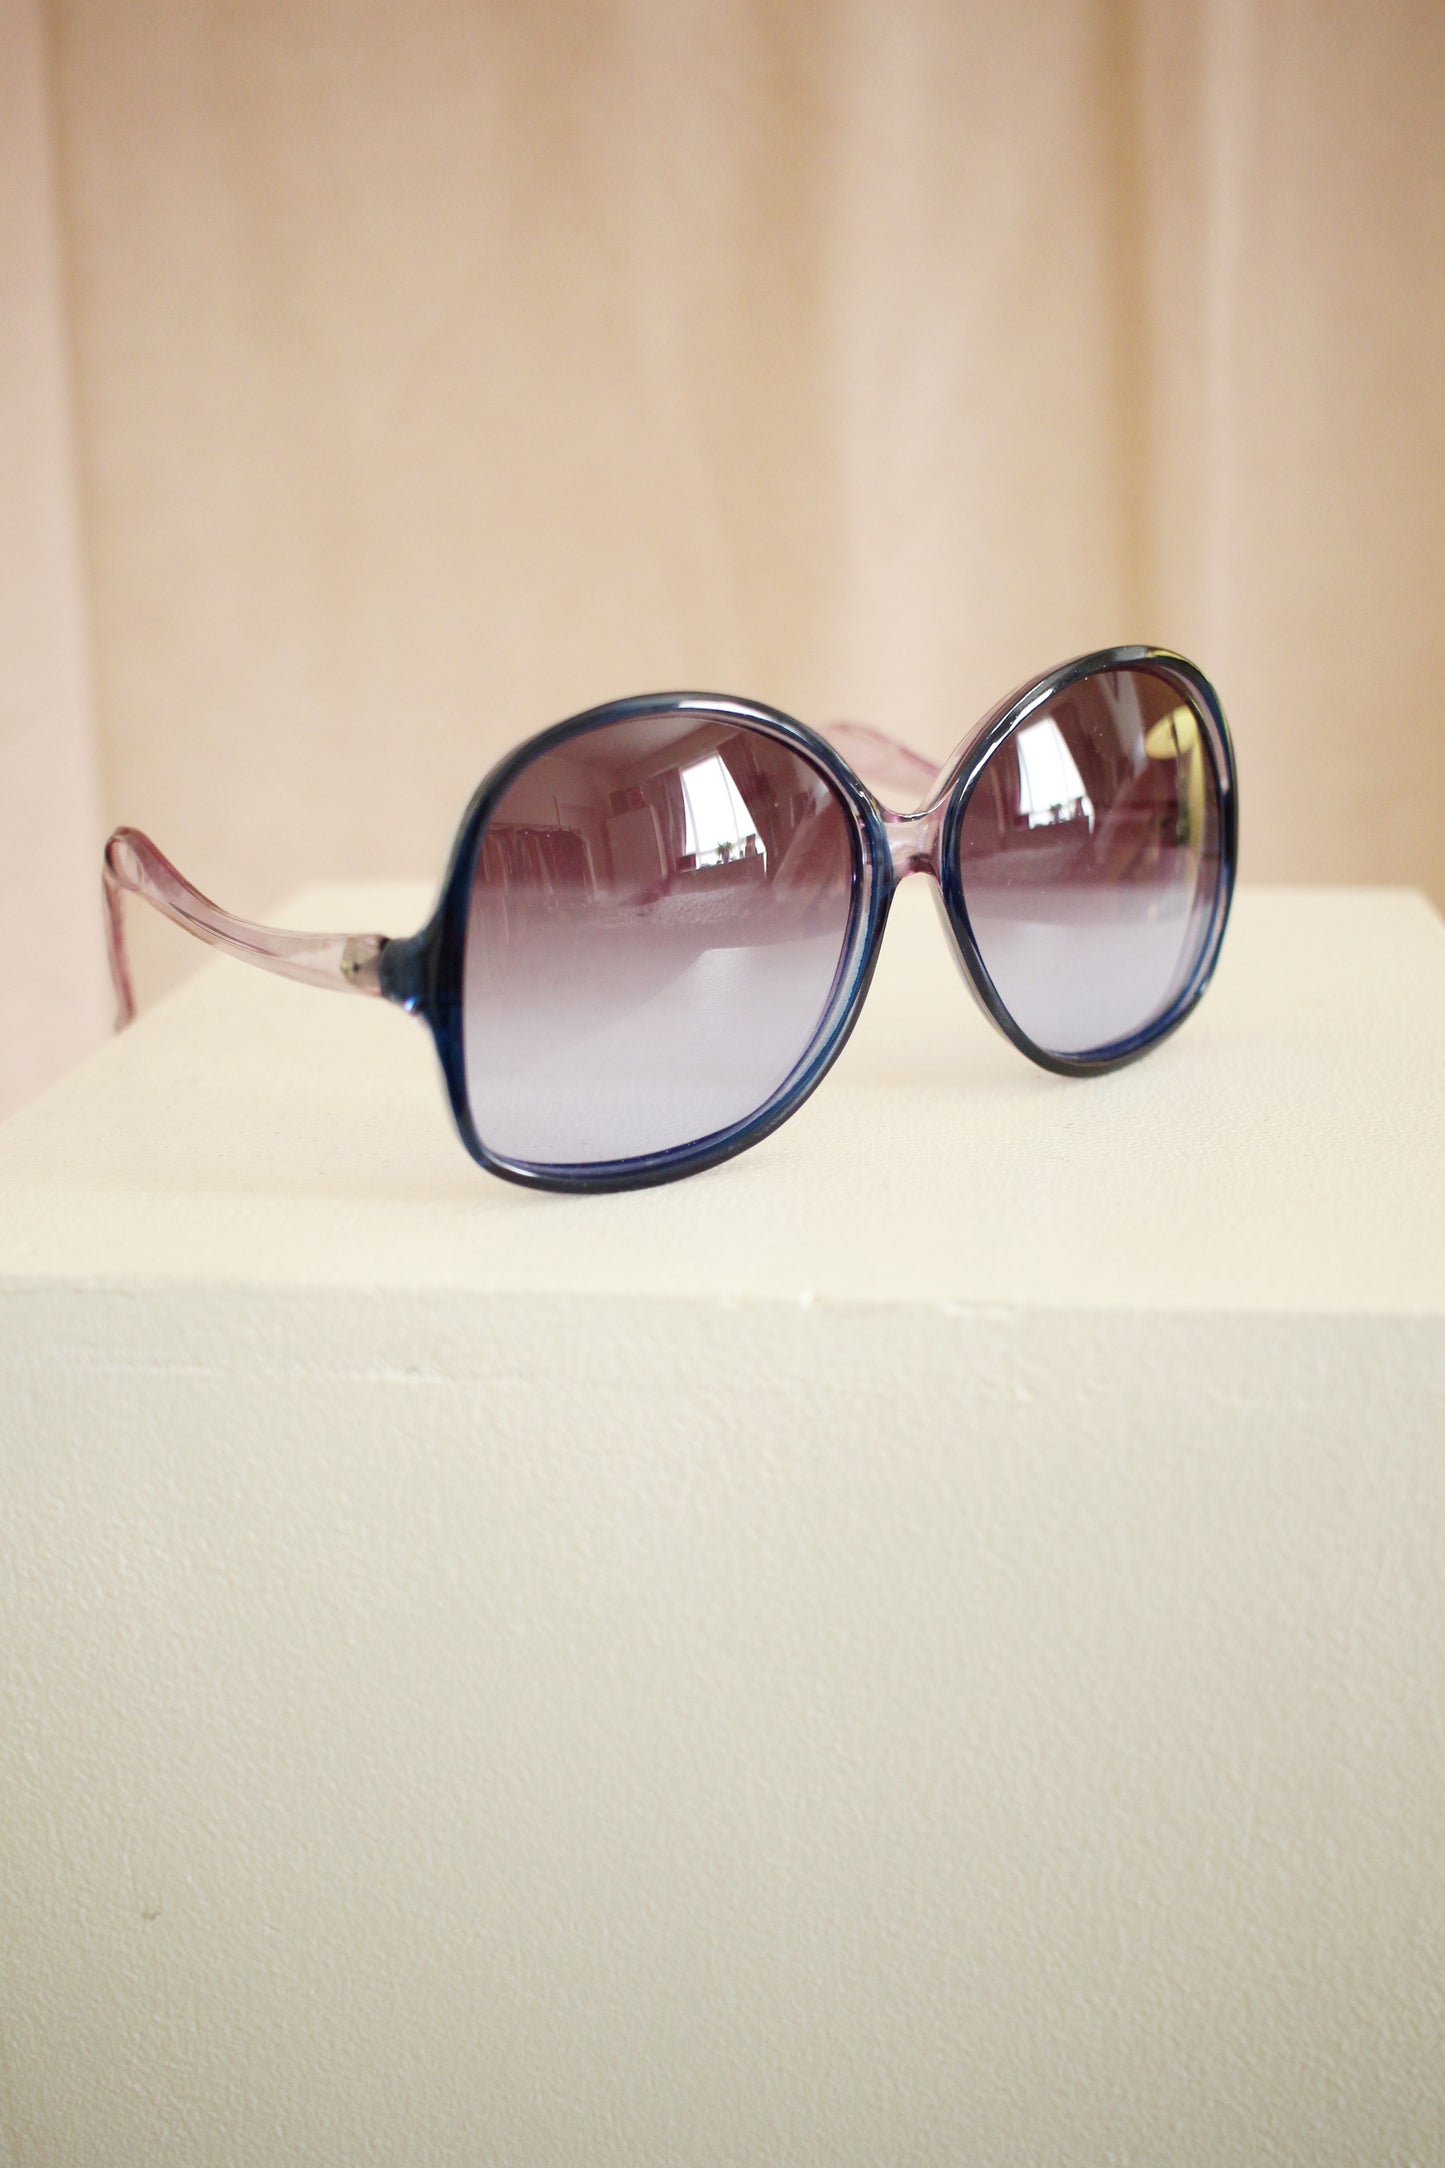 70s Sunglasses - Purple with Blue Frame